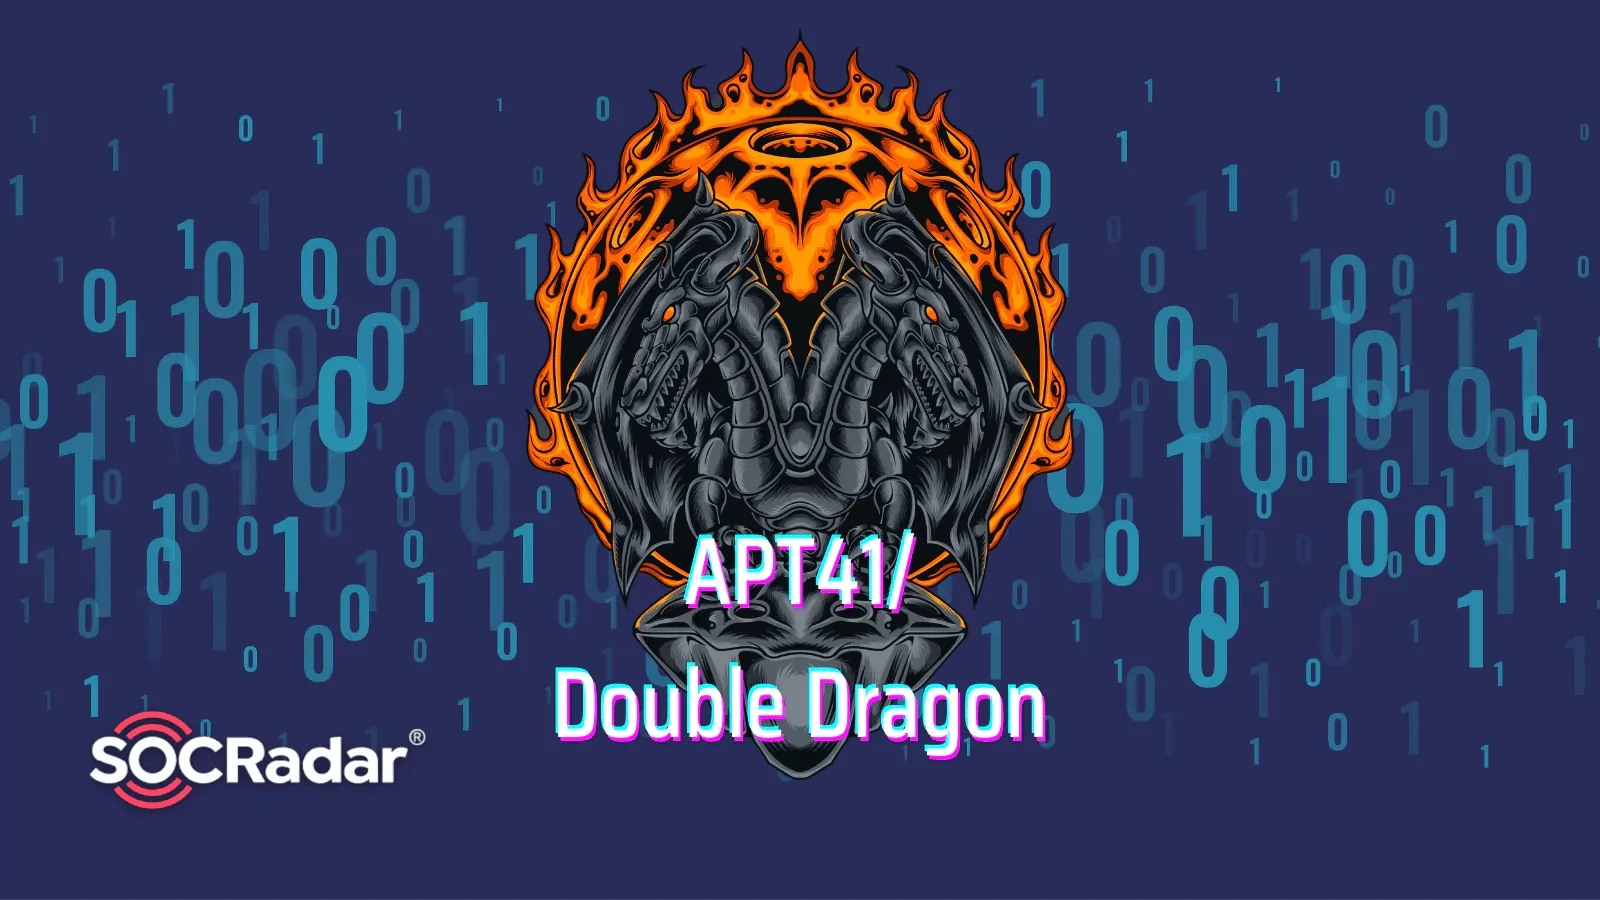 APT41, also known as Double Dragon